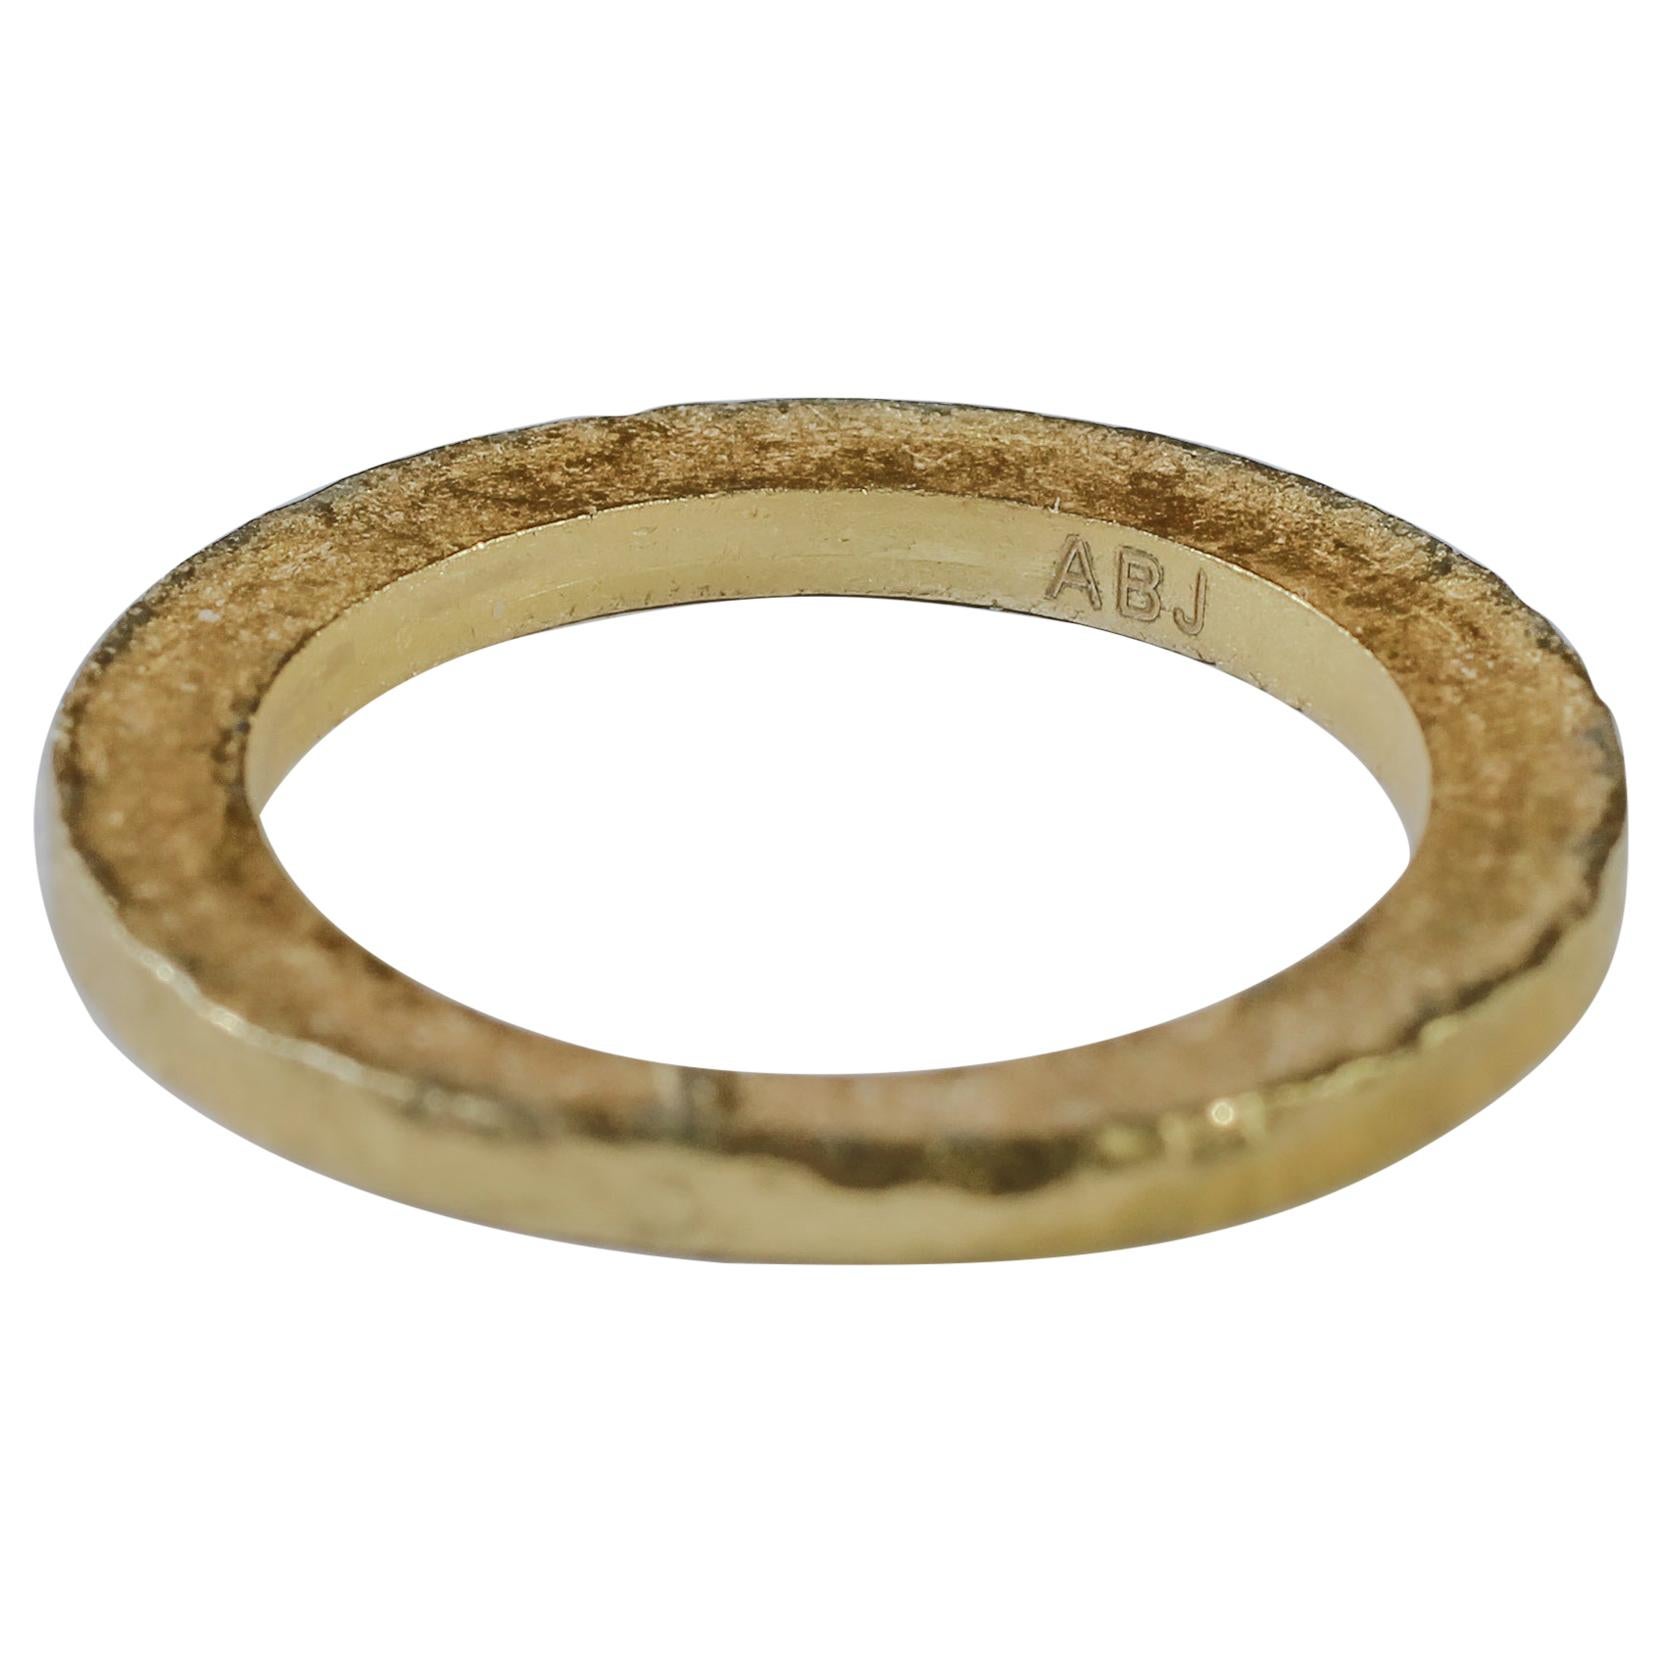 22K Recycled Gold Bridal Wedding Ring Alternative Stacking Fashion Design